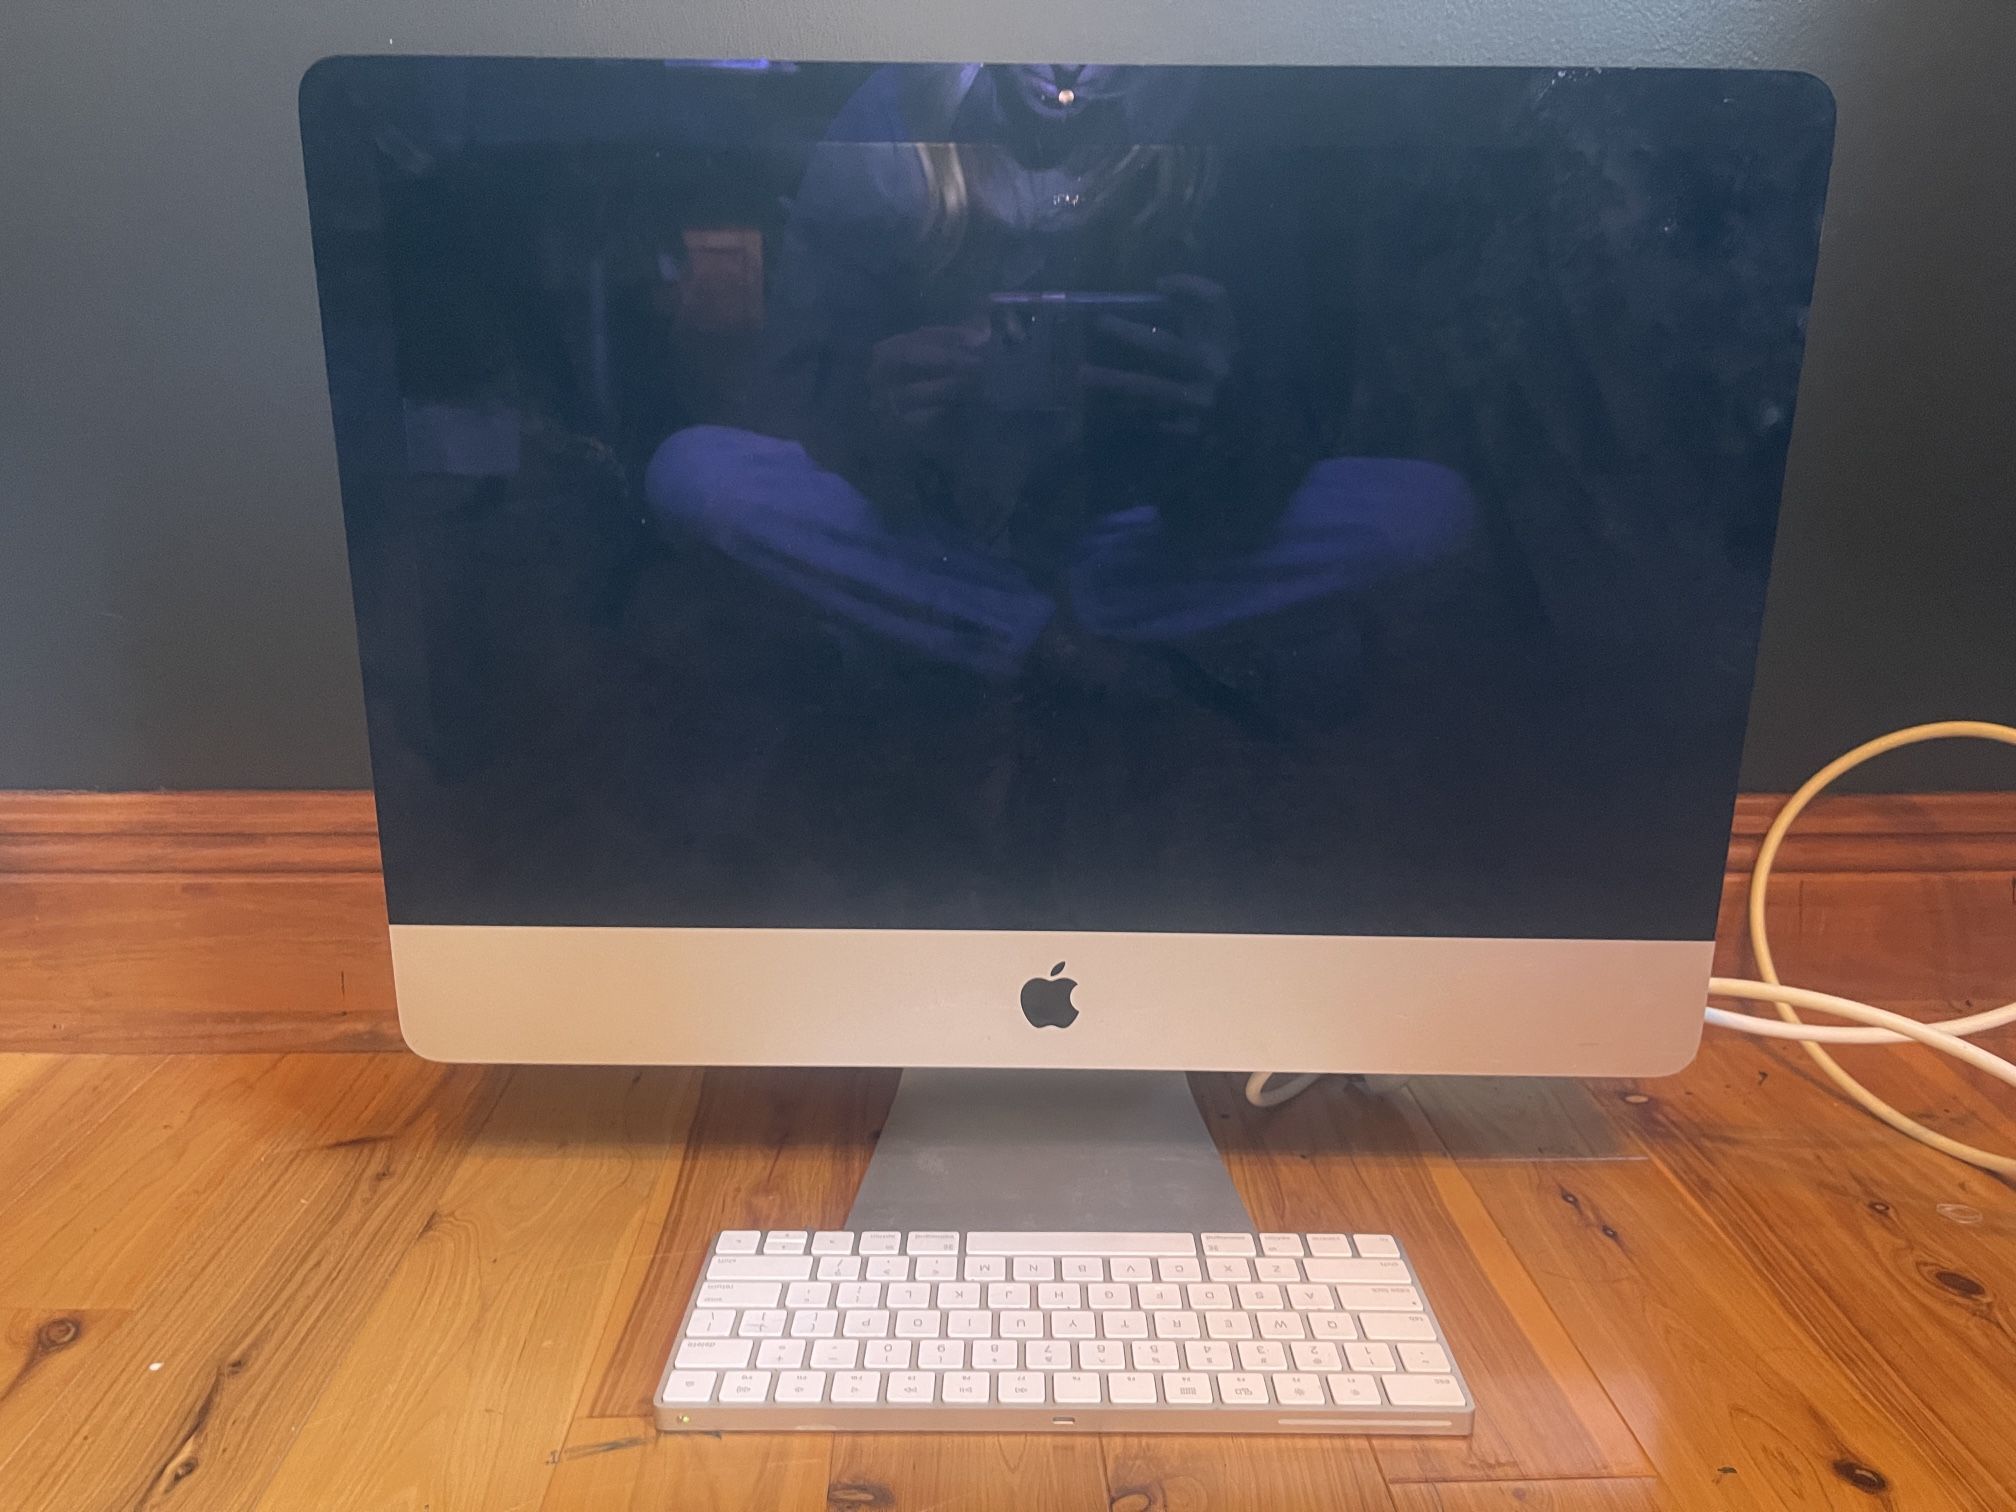 iMac desktop computer